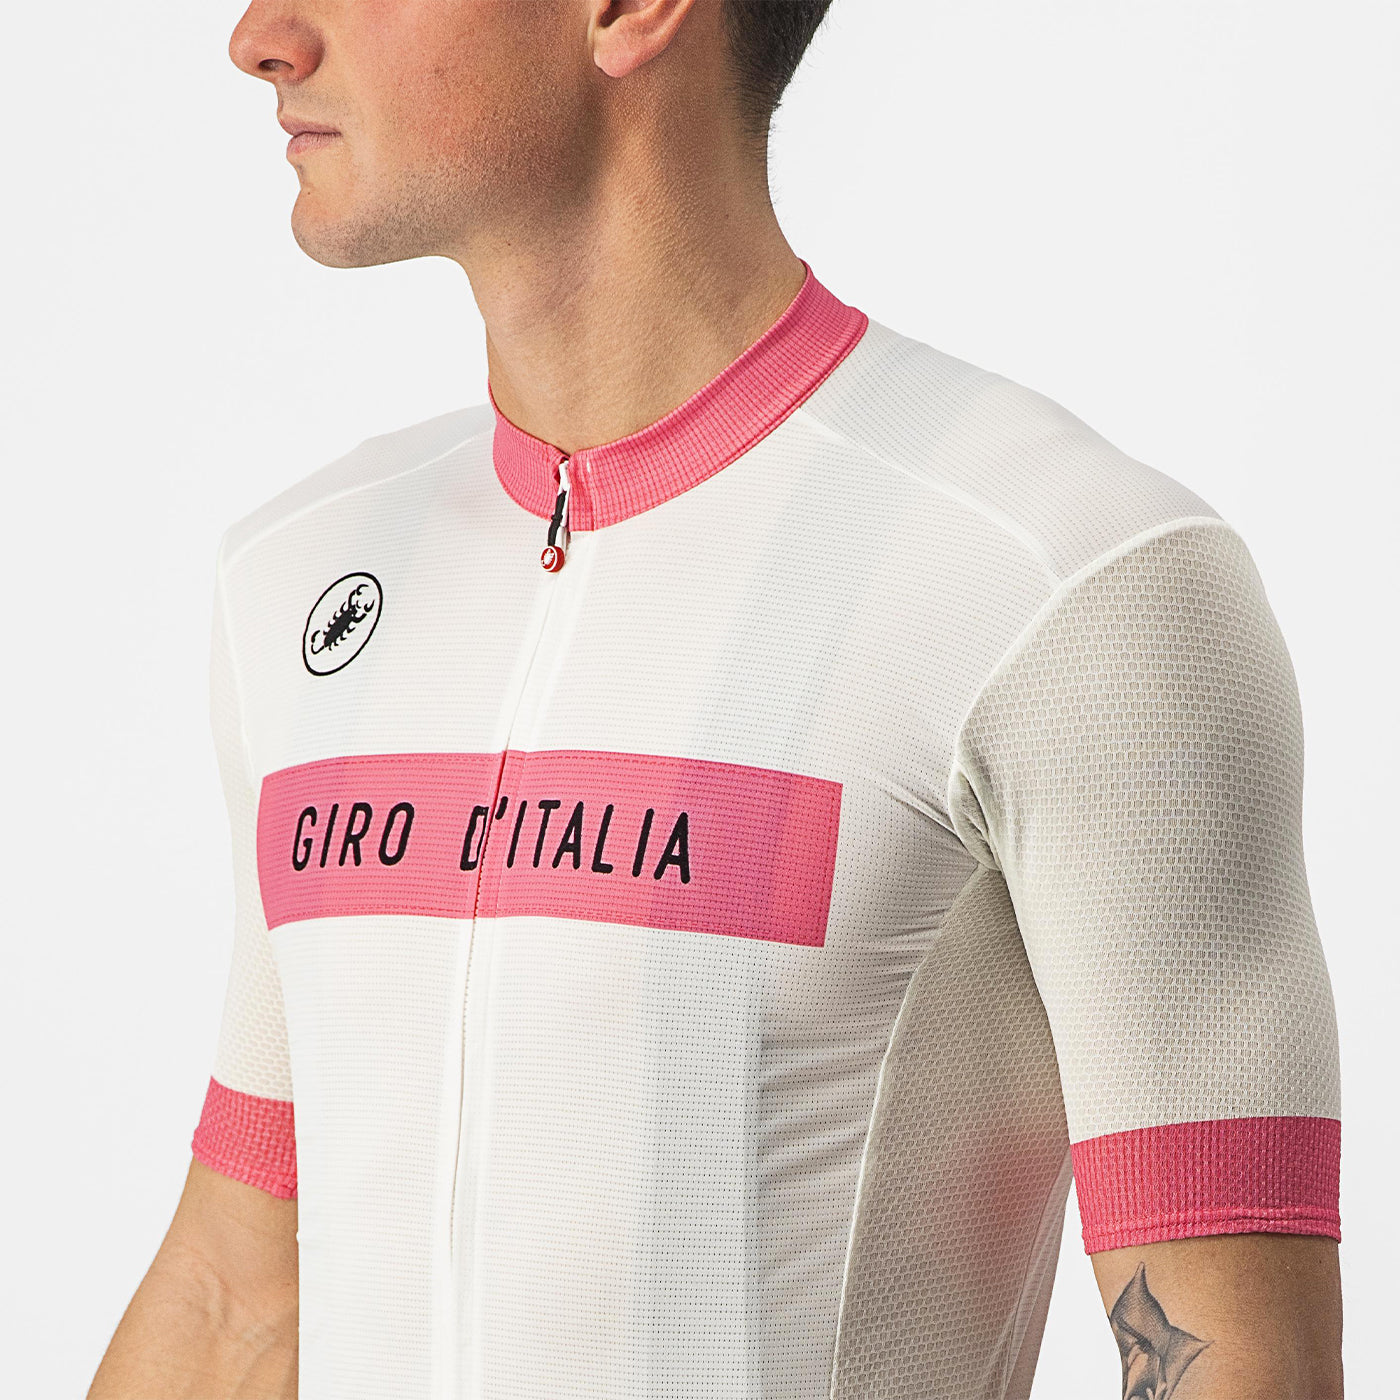 Castelli Fuori Giro trikot - Weiss 